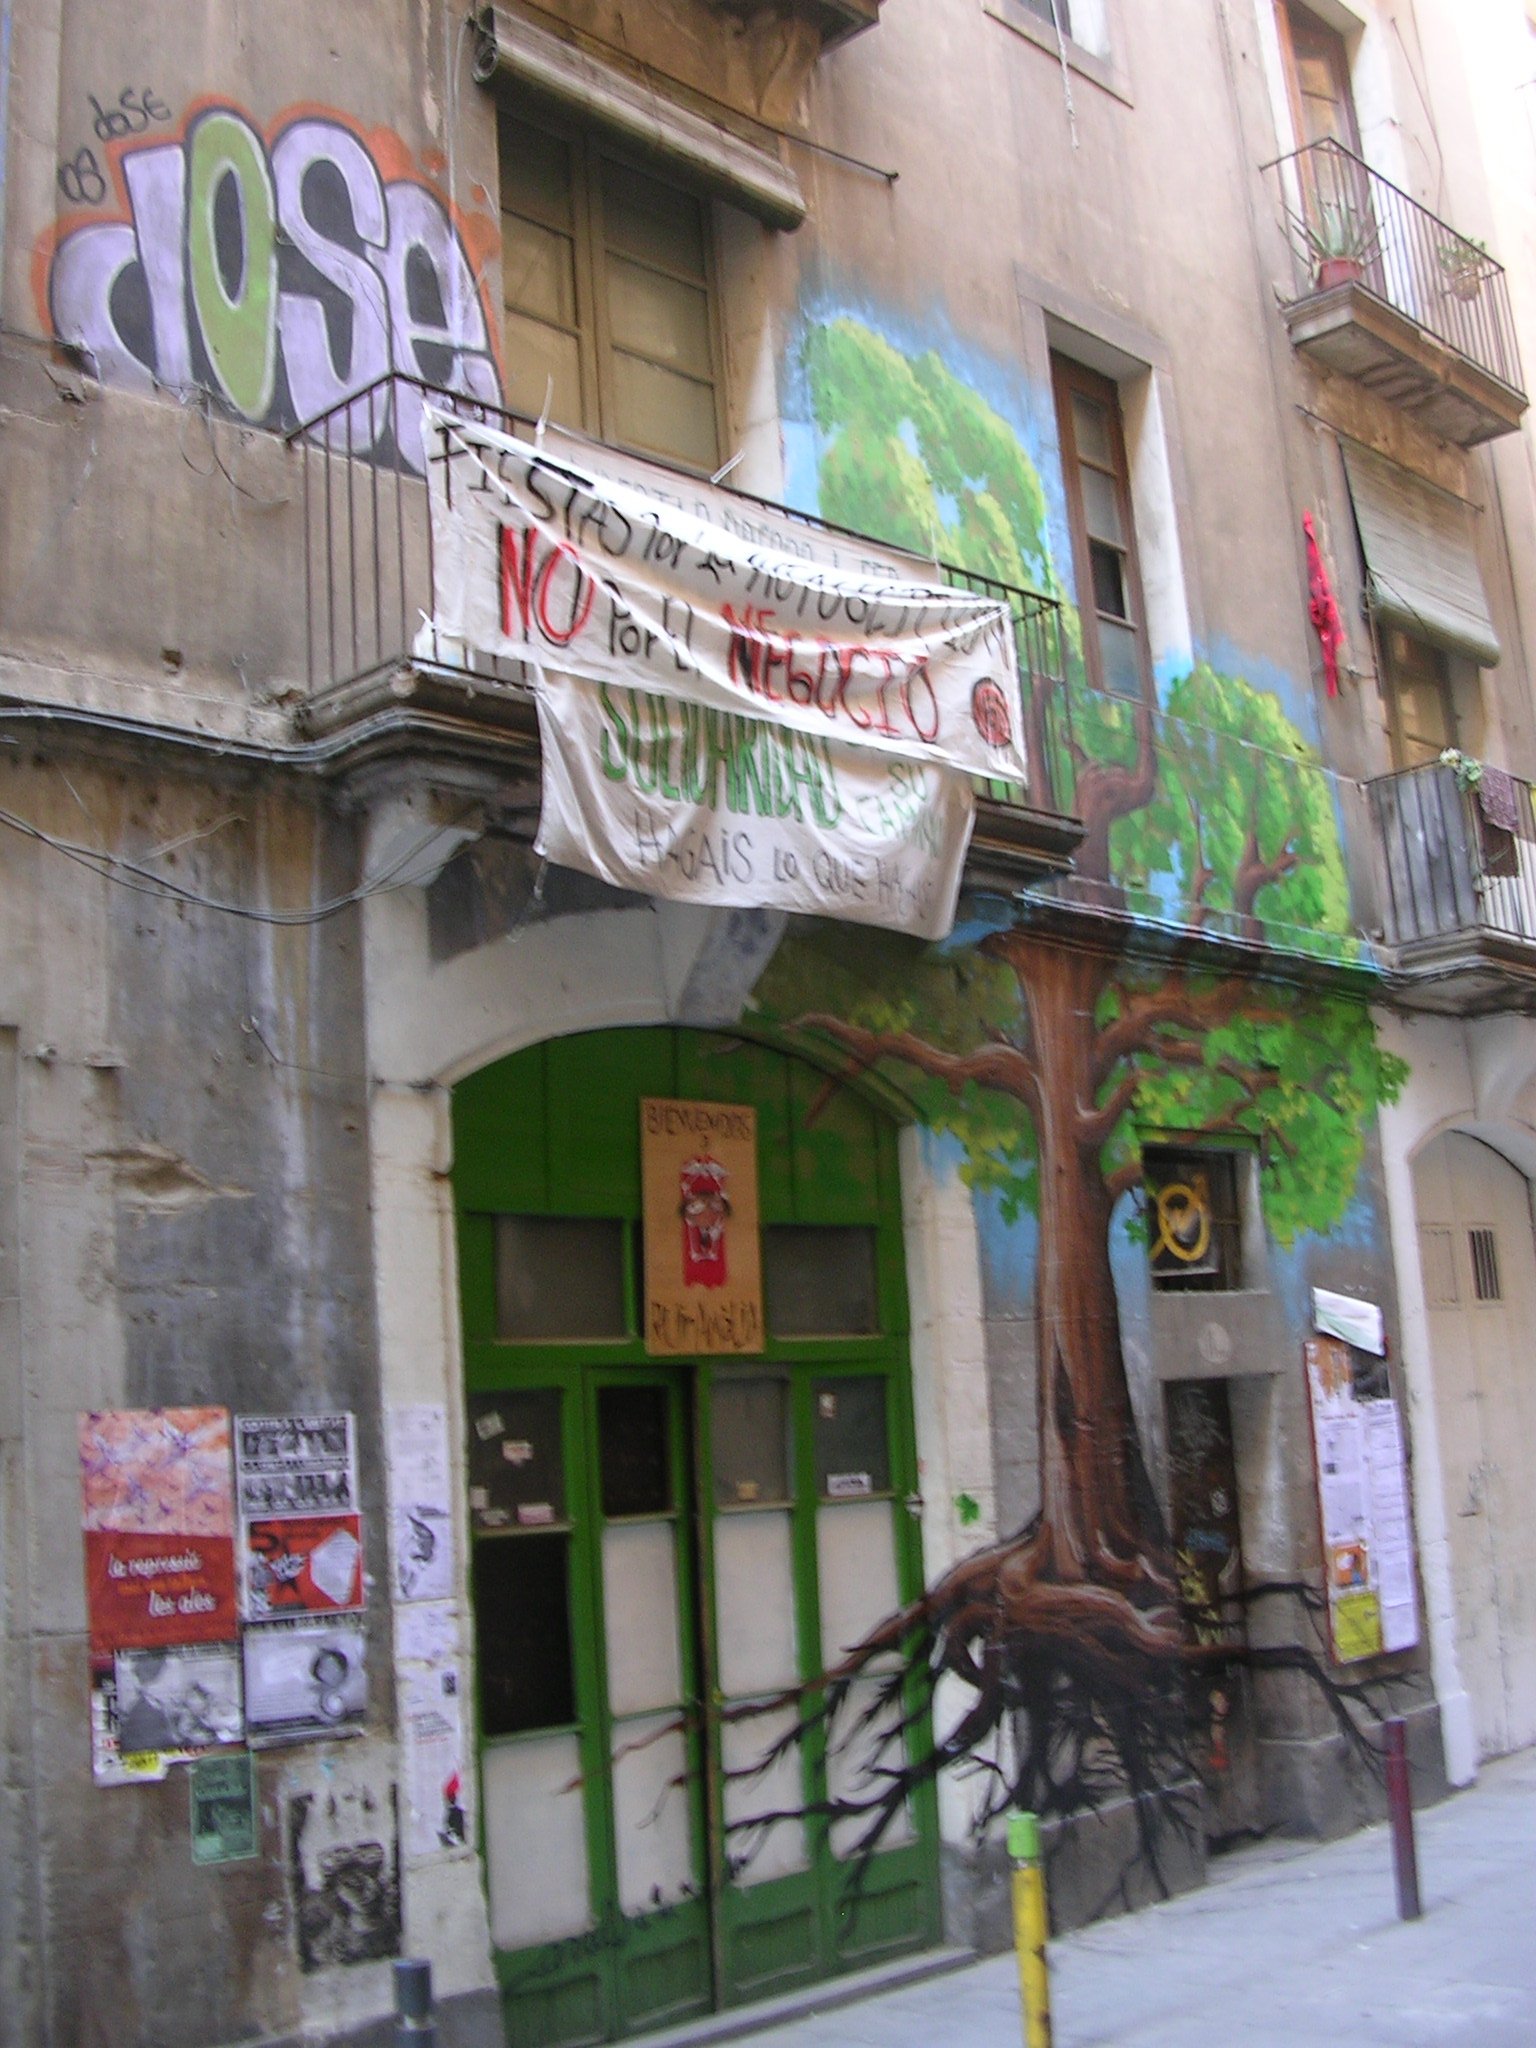 Casa ocupada "Ruina Amalia" en Barcelona el 28 de julio de 2007. | Foto: Wikimedia Commons